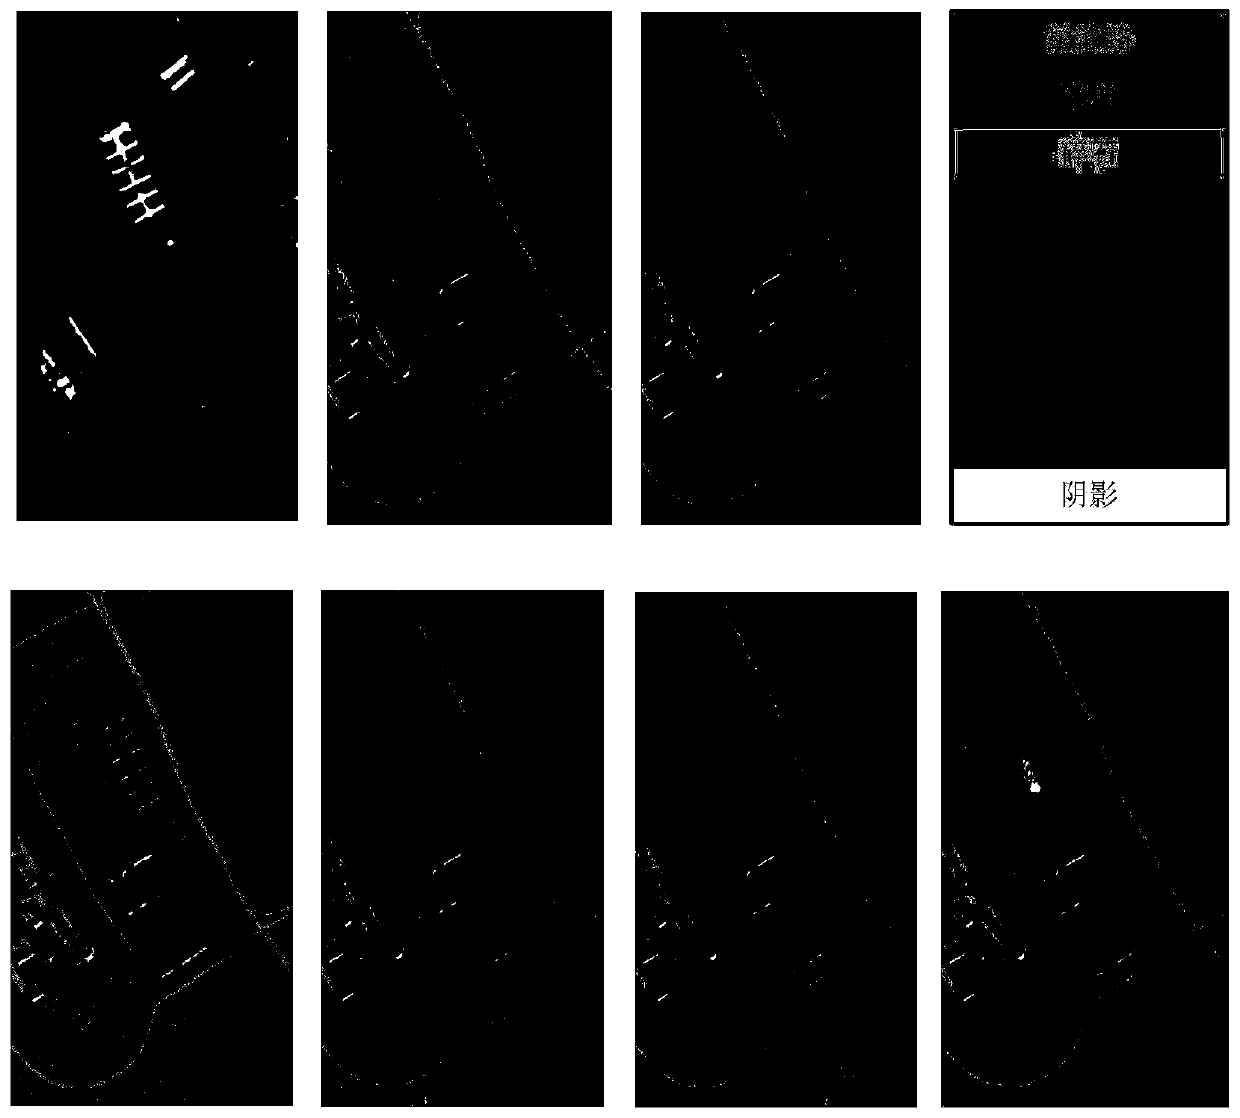 Hyperspectral image noise label detection method based on super-pixel weight density